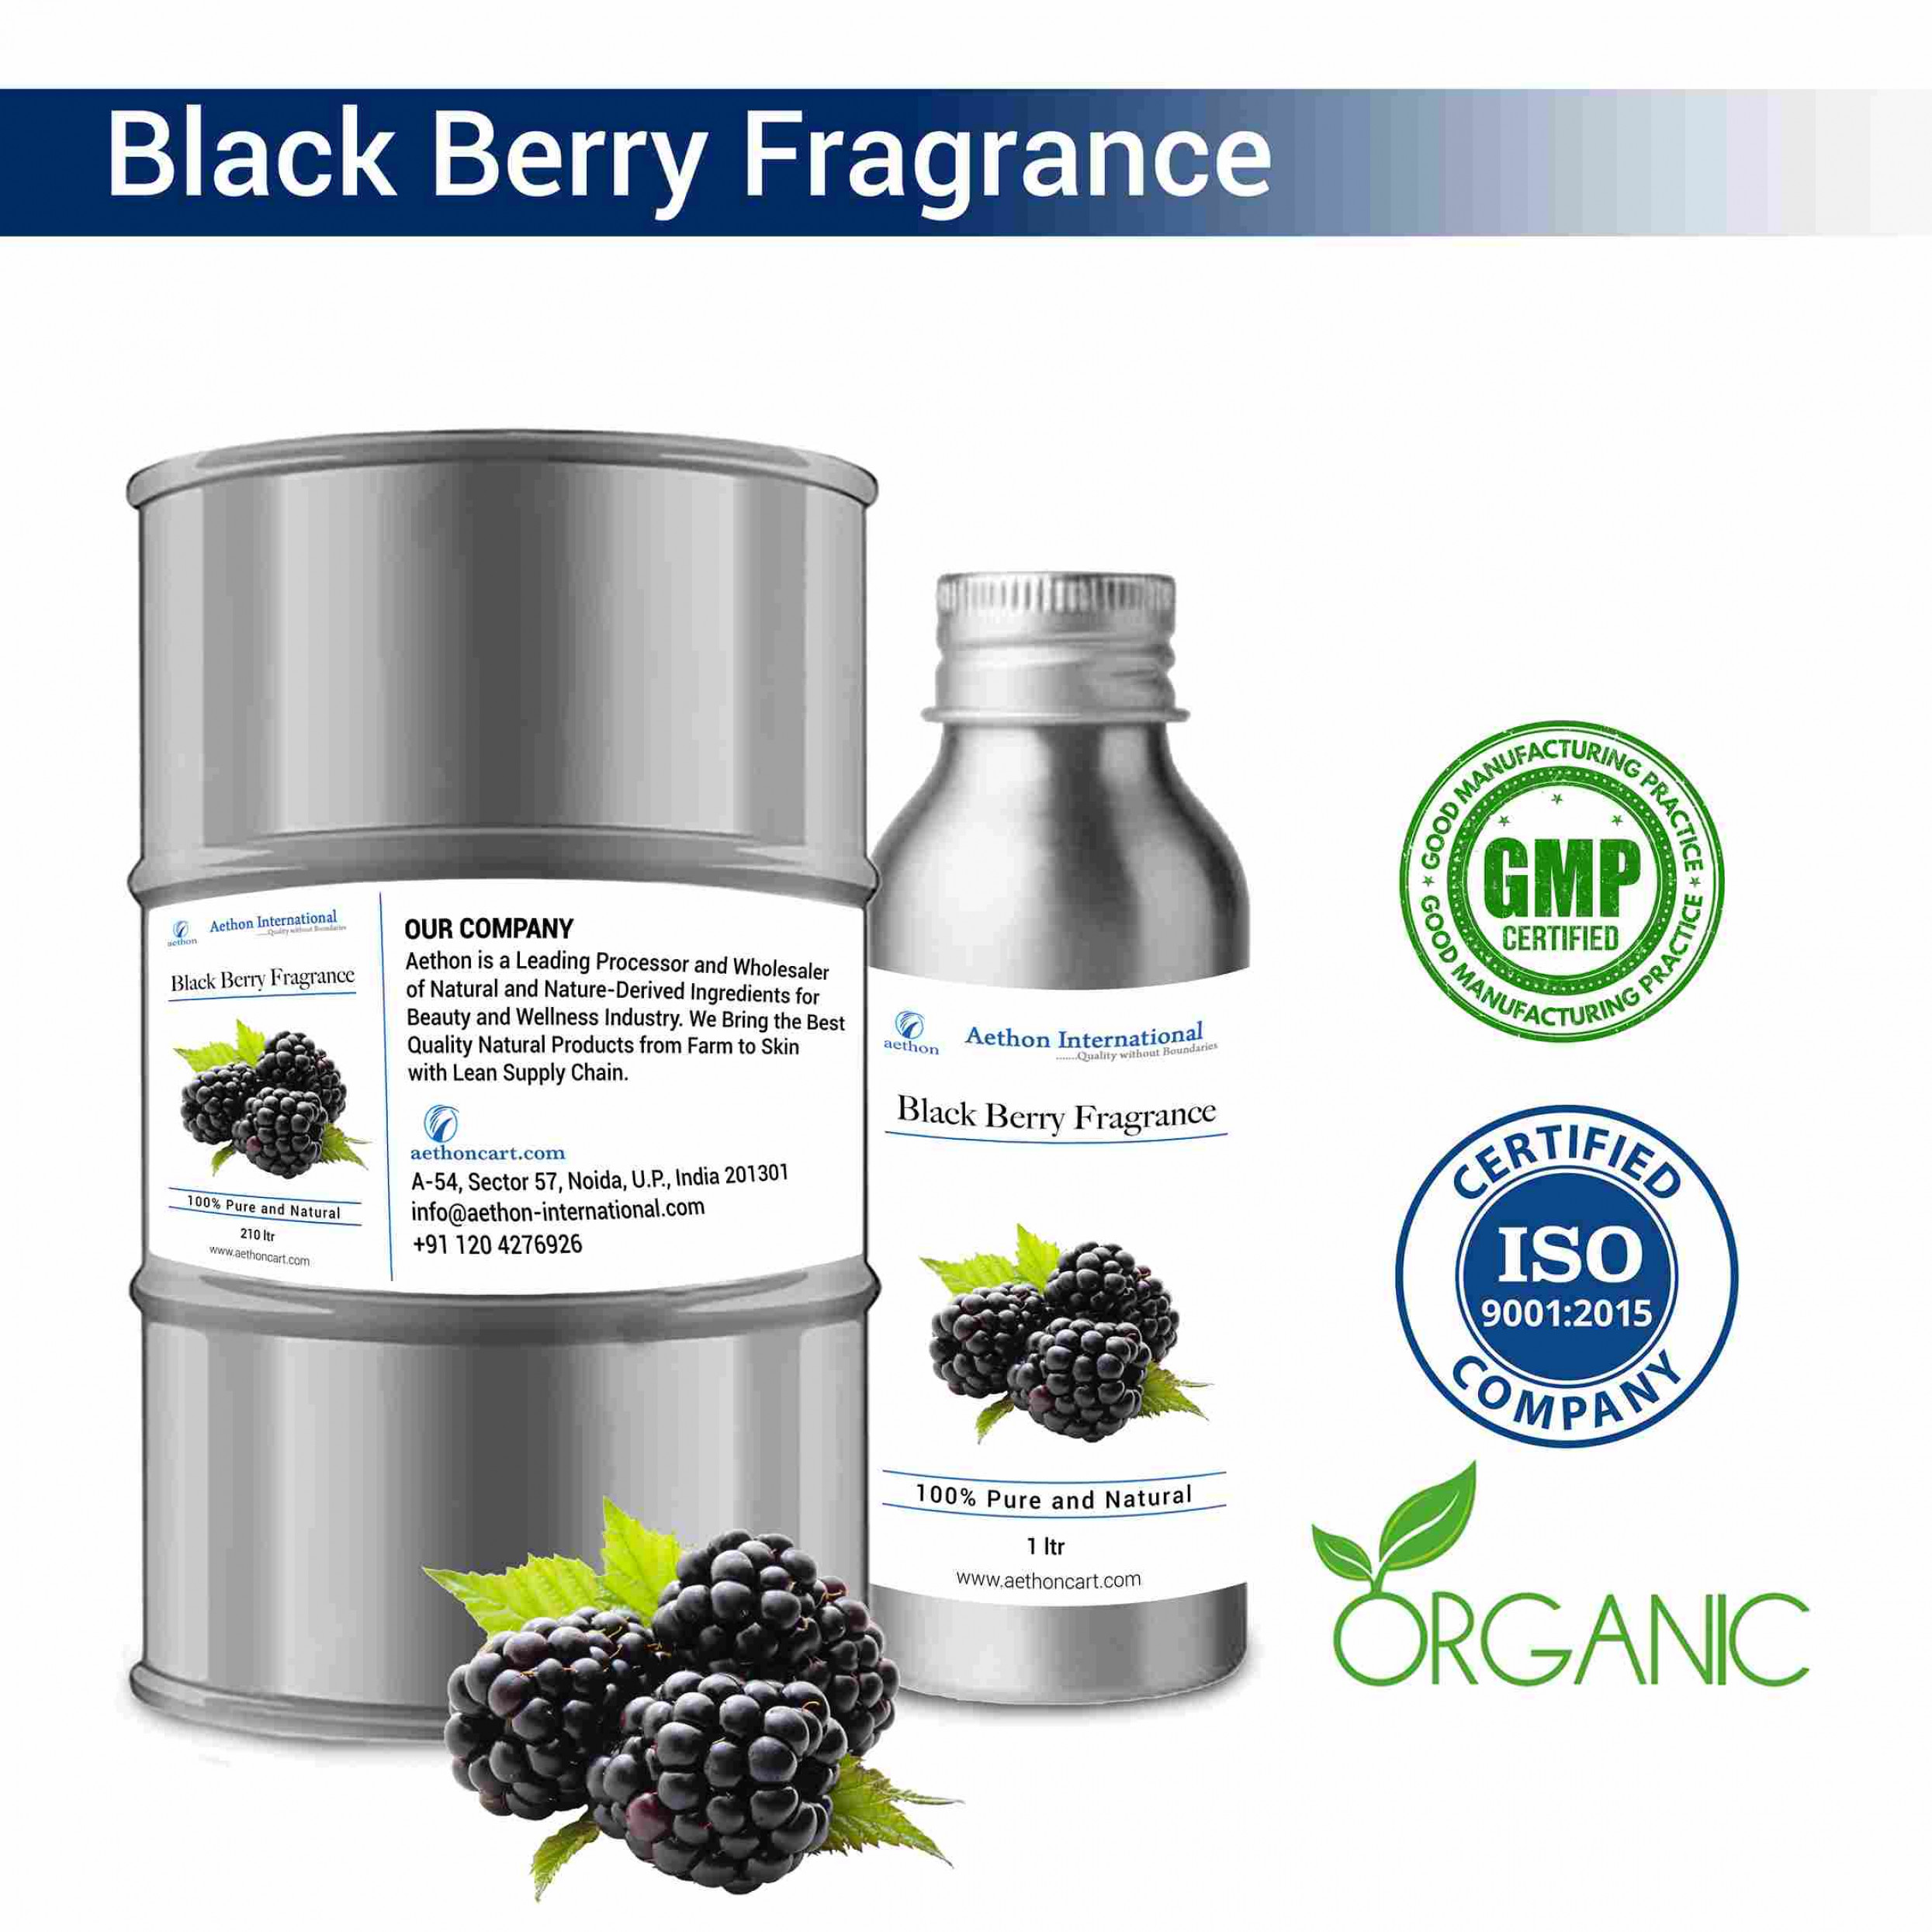 Black Berry Fragrance